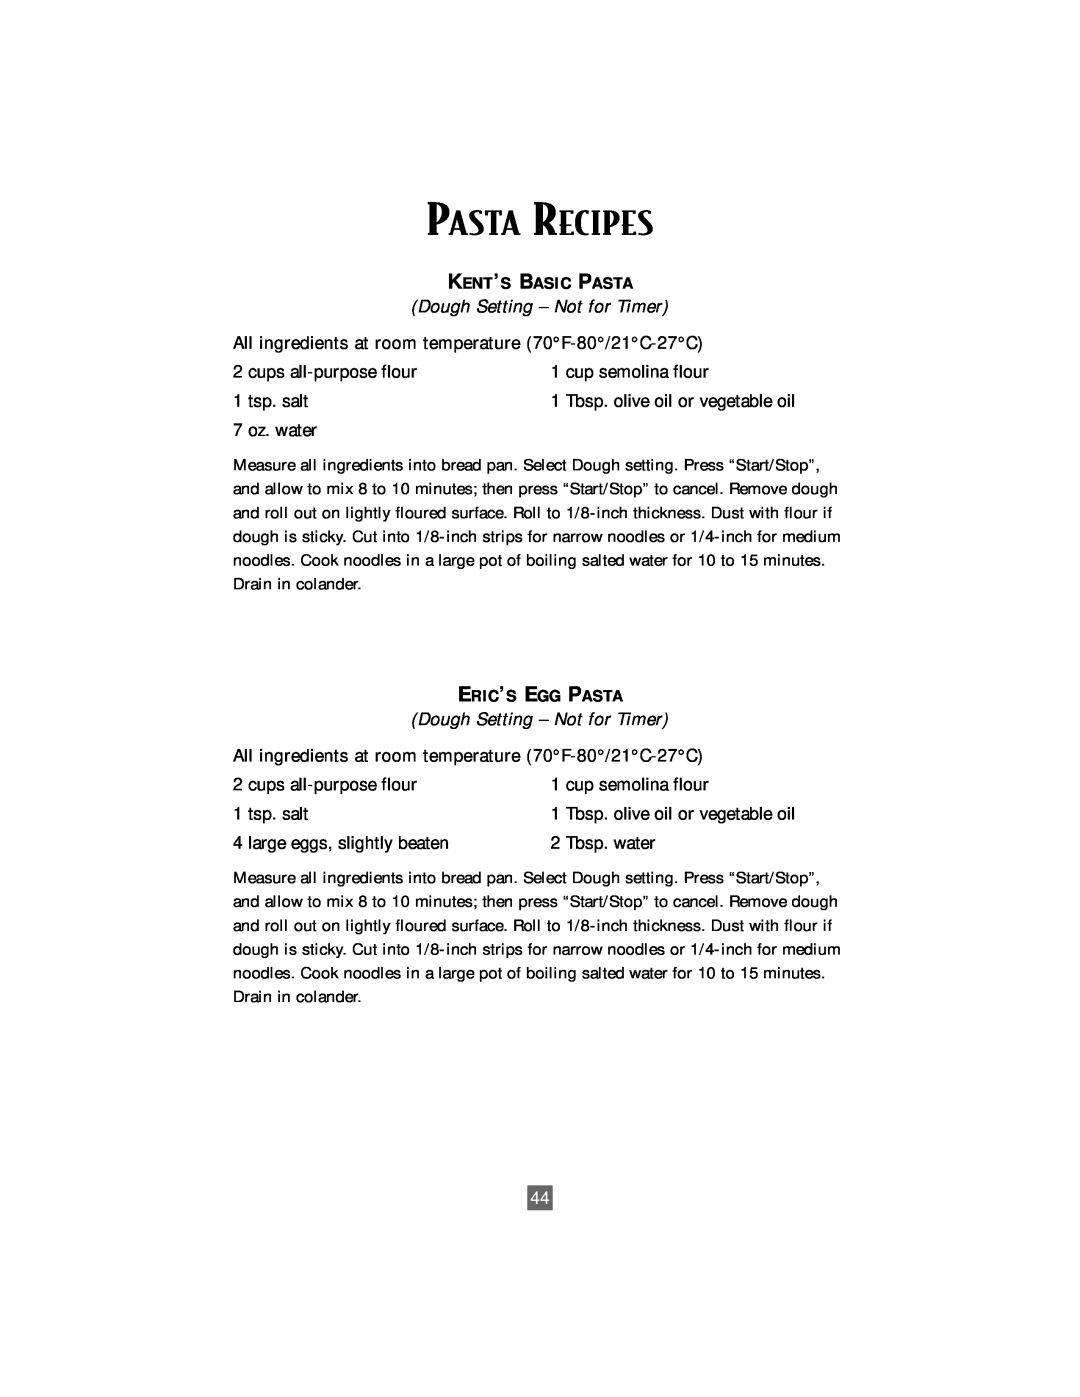 Sunbeam Deluxe 2-Pound Bread & Dough Maker manual Pasta Recipes, Dough Setting - Not for Timer, Kent’S Basic Pasta 